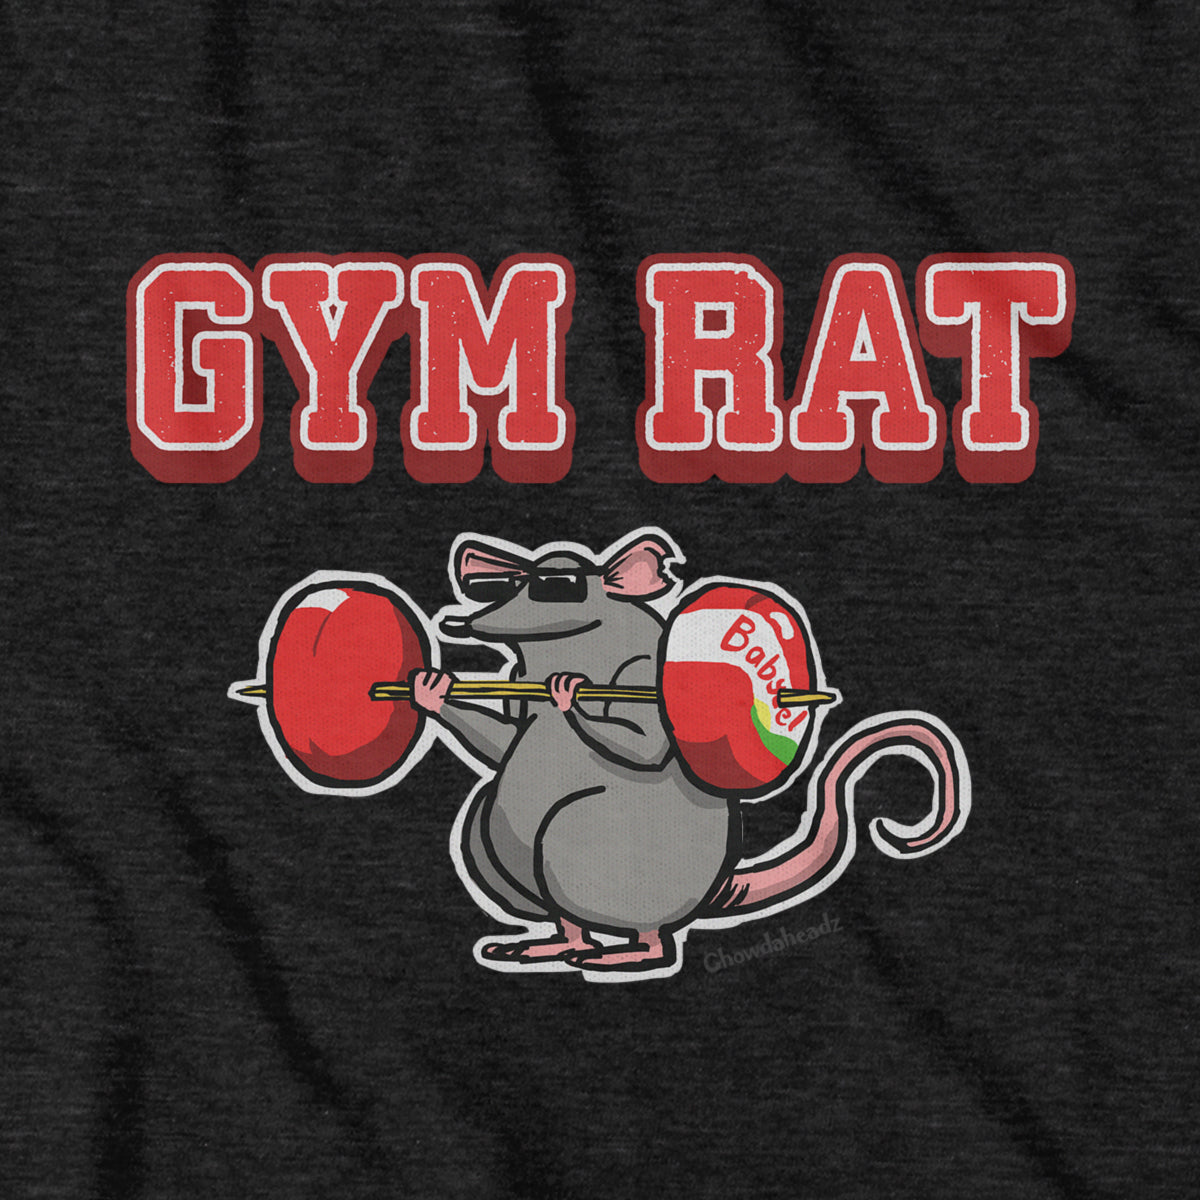 Gym Rat T-Shirt - Chowdaheadz